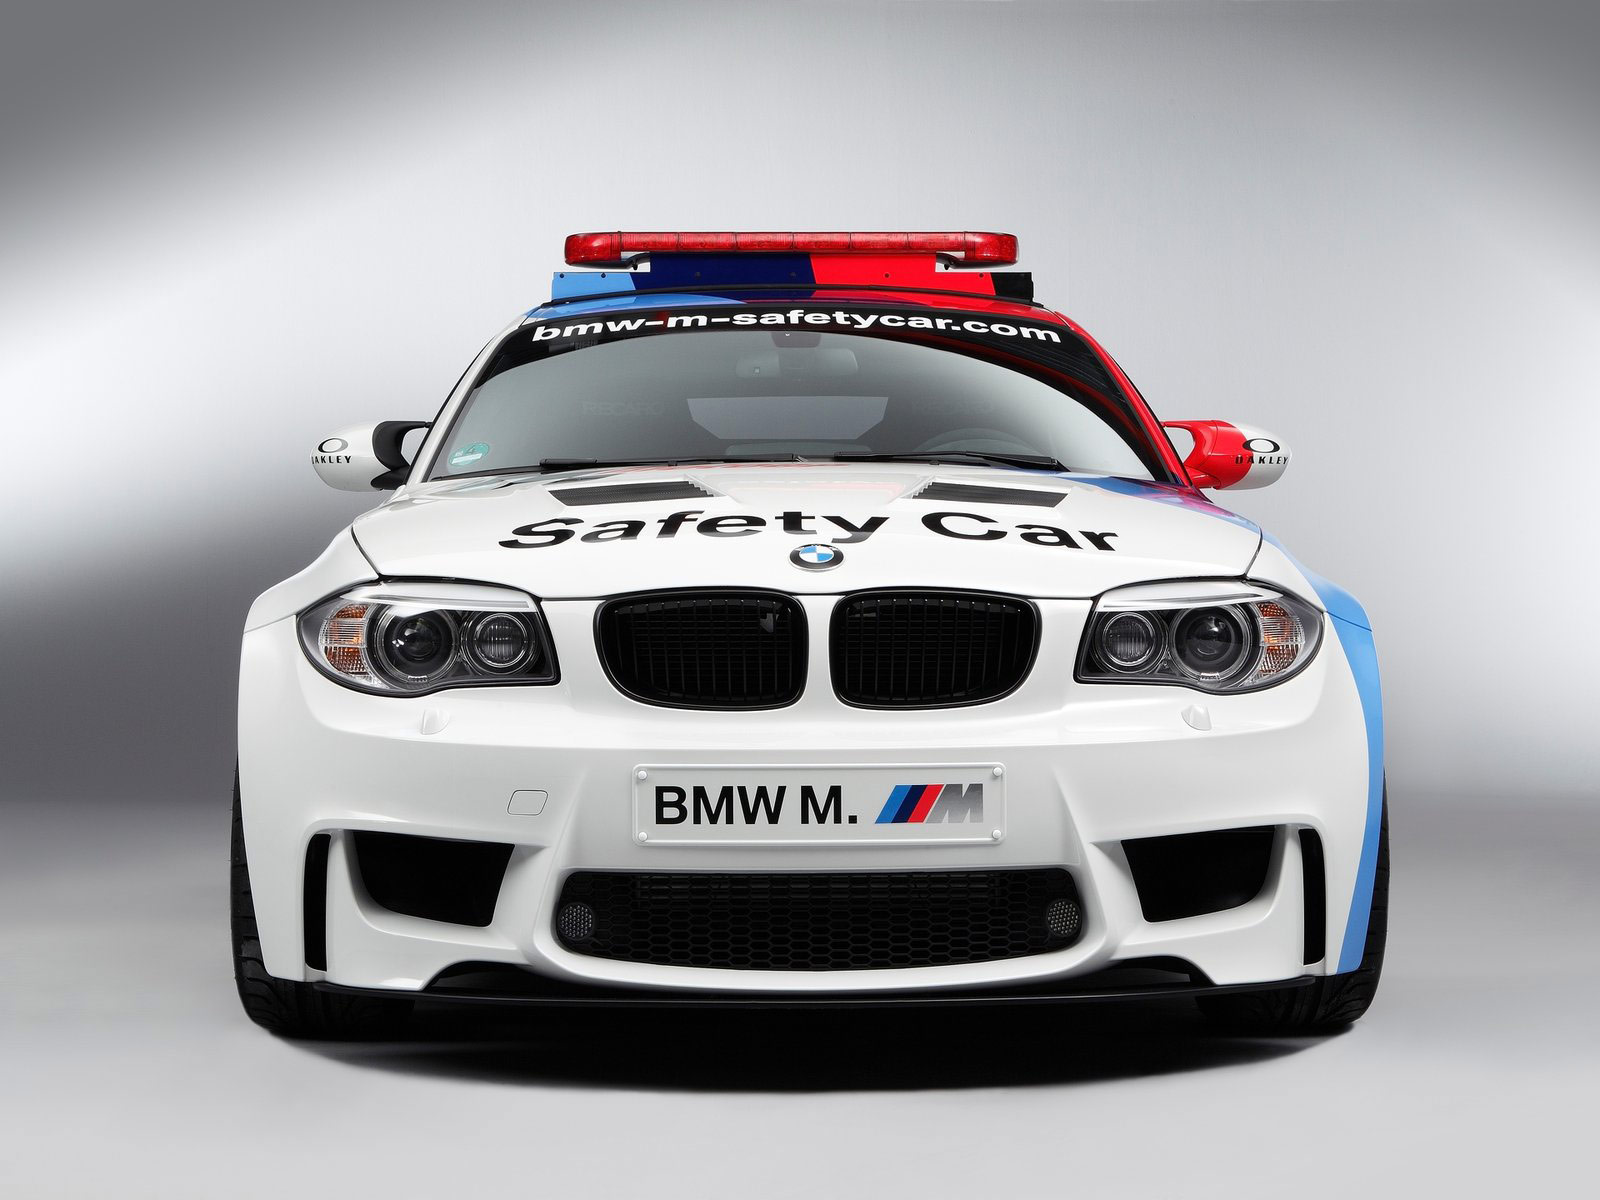 2011 BMW 1 Series M Coupe MotoGP Safety Car